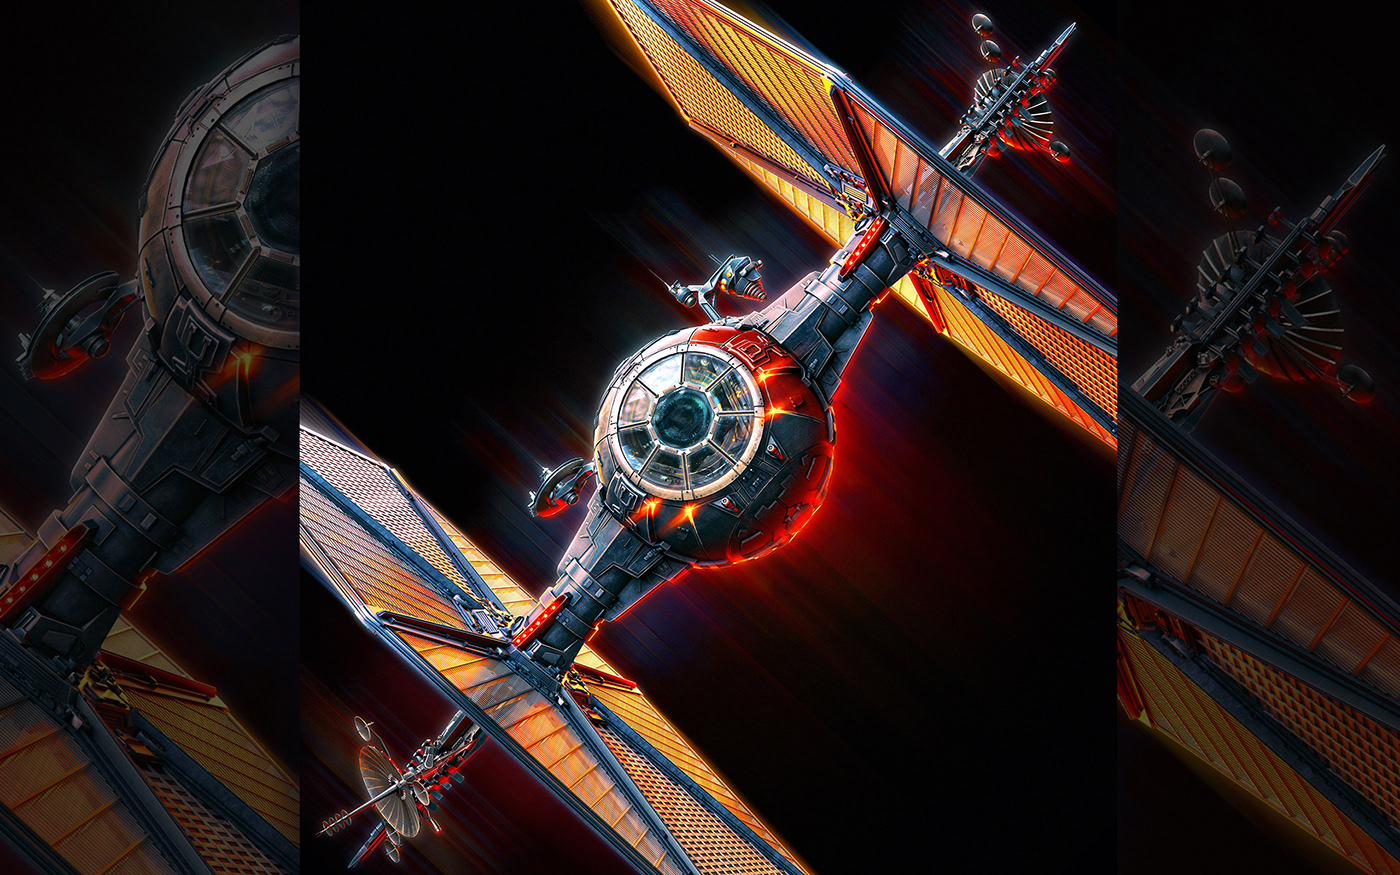 print poster concept alekscg kuskov the dark side star wars Fan Art spaceship 3D